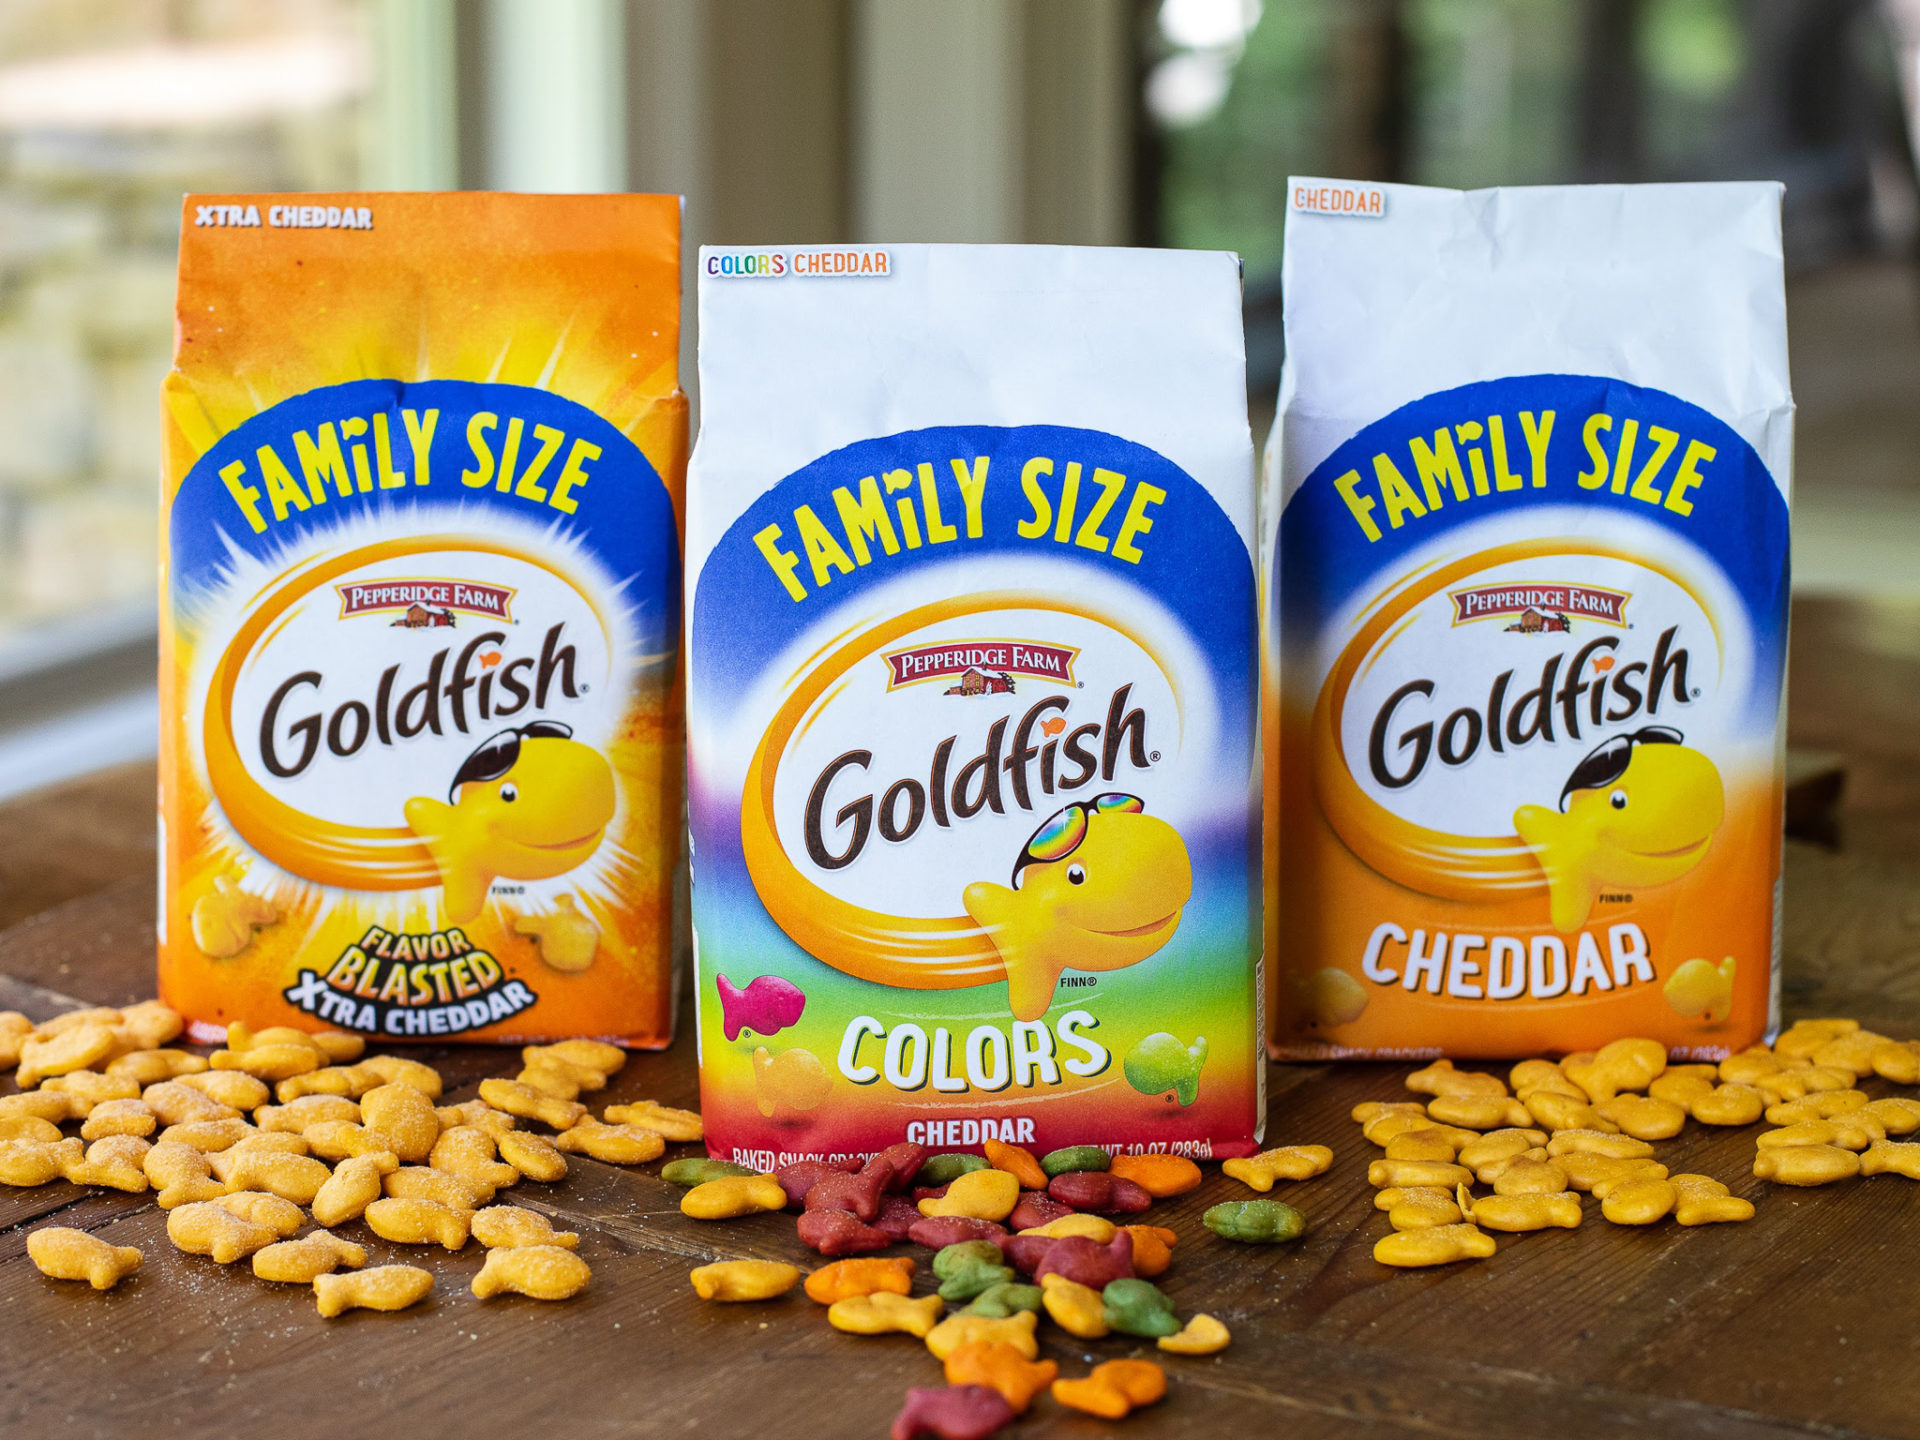 Family Size Bags Of Pepperidge Farm Goldfish Just $2.99 At Kroger